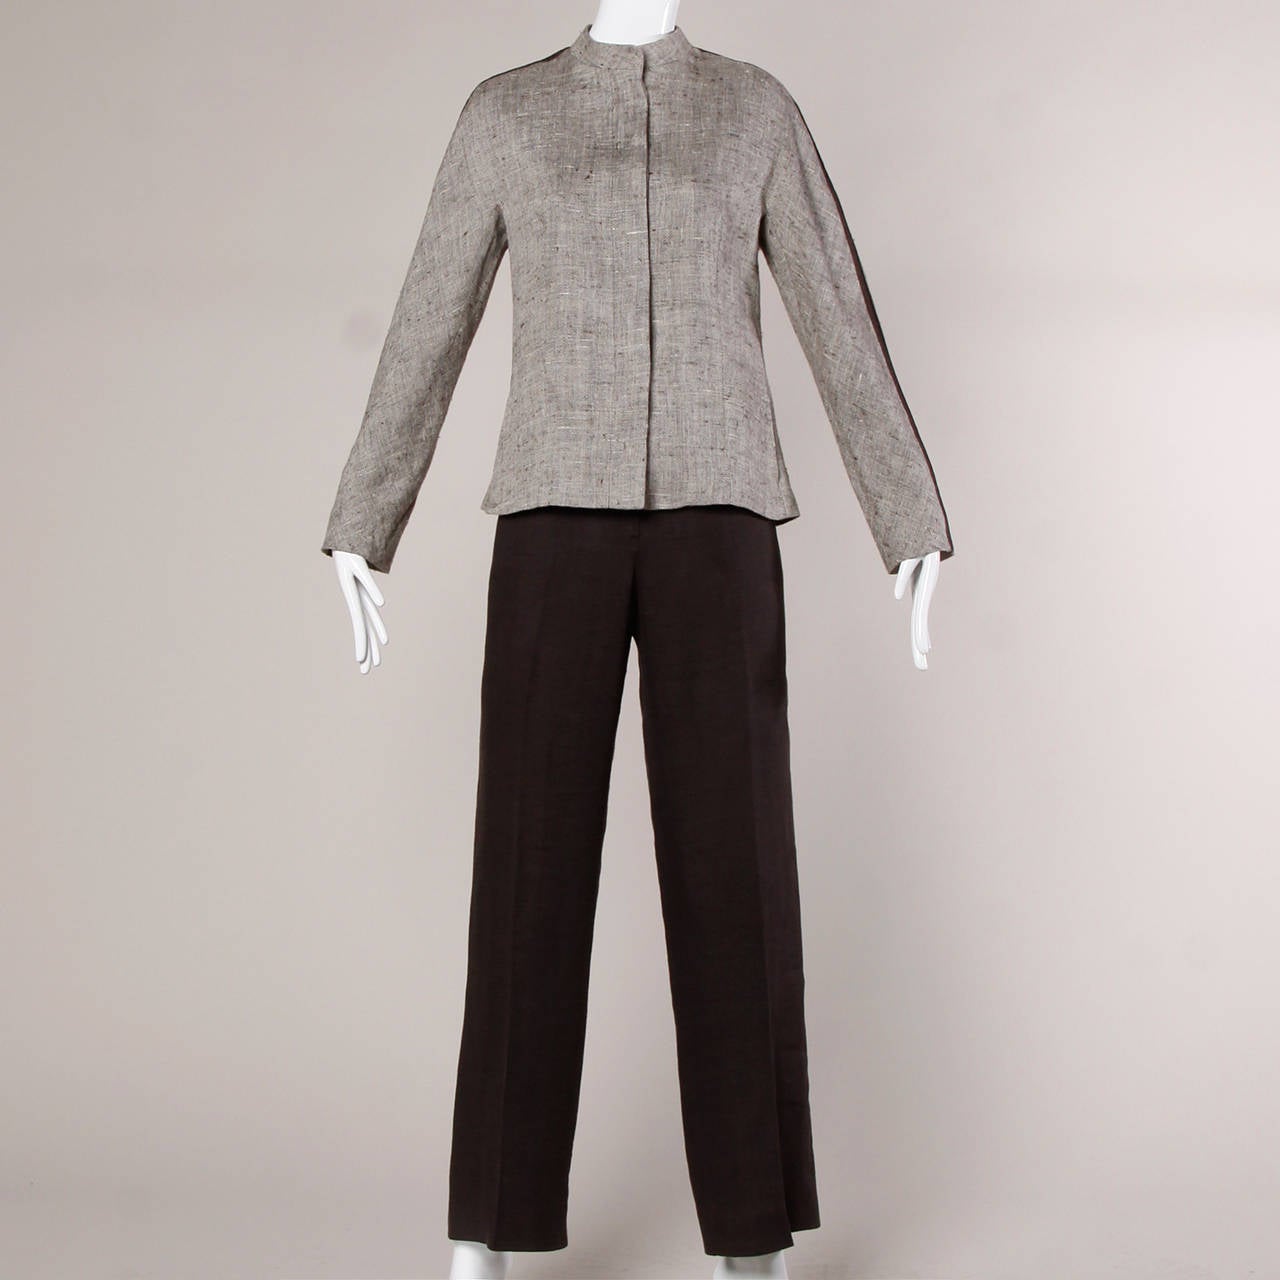 Women's 1990s Max Mara Linen/ Silk Jacket + Pants Suit Ensemble